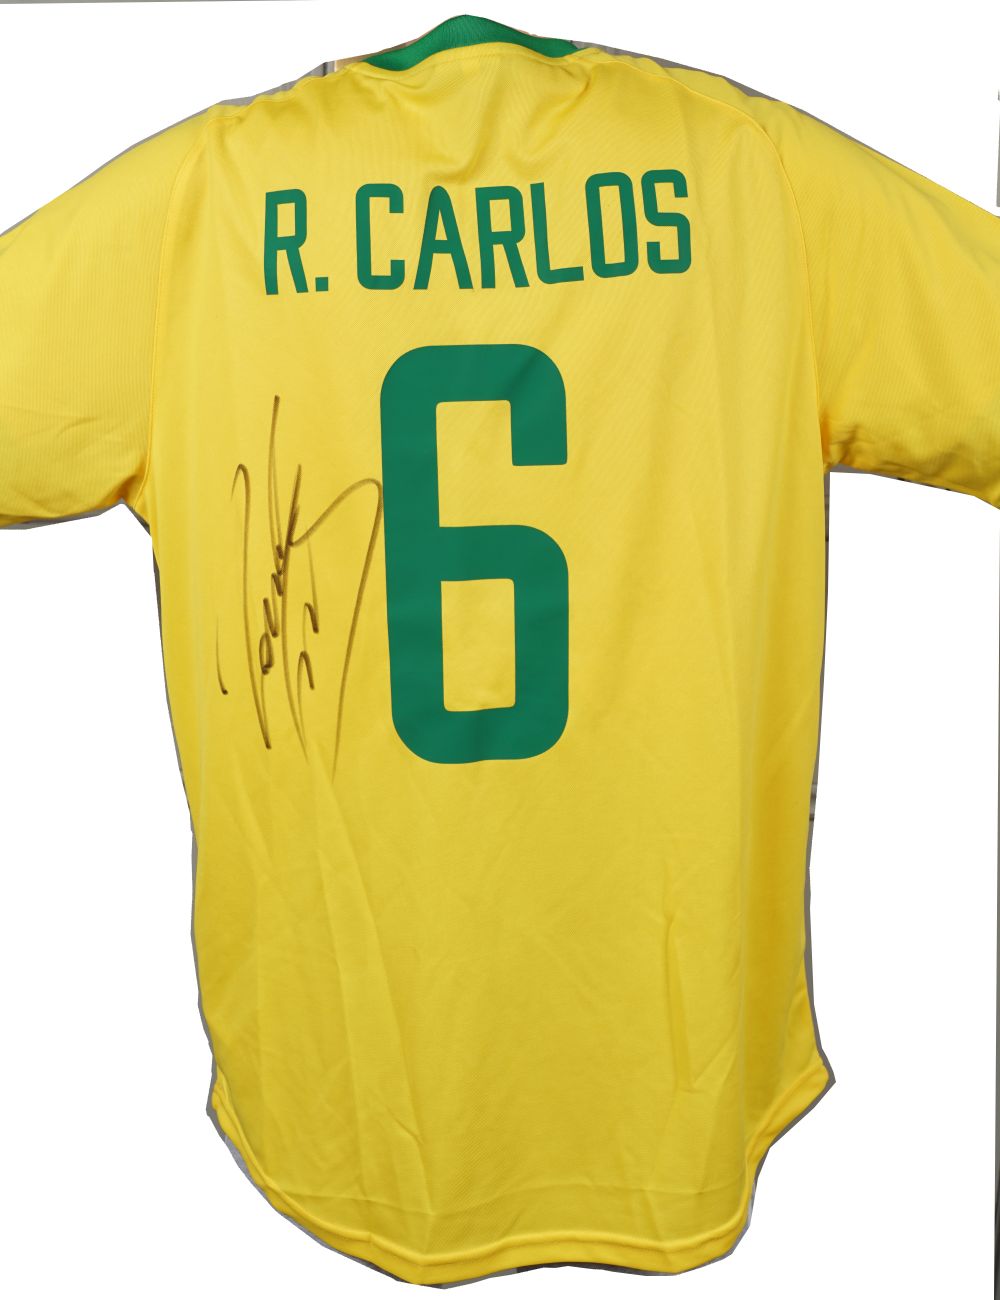 ROBERTO CARLOS SIGNED 2000 BRAZIL RETRO JERSEY - Image 2 of 3